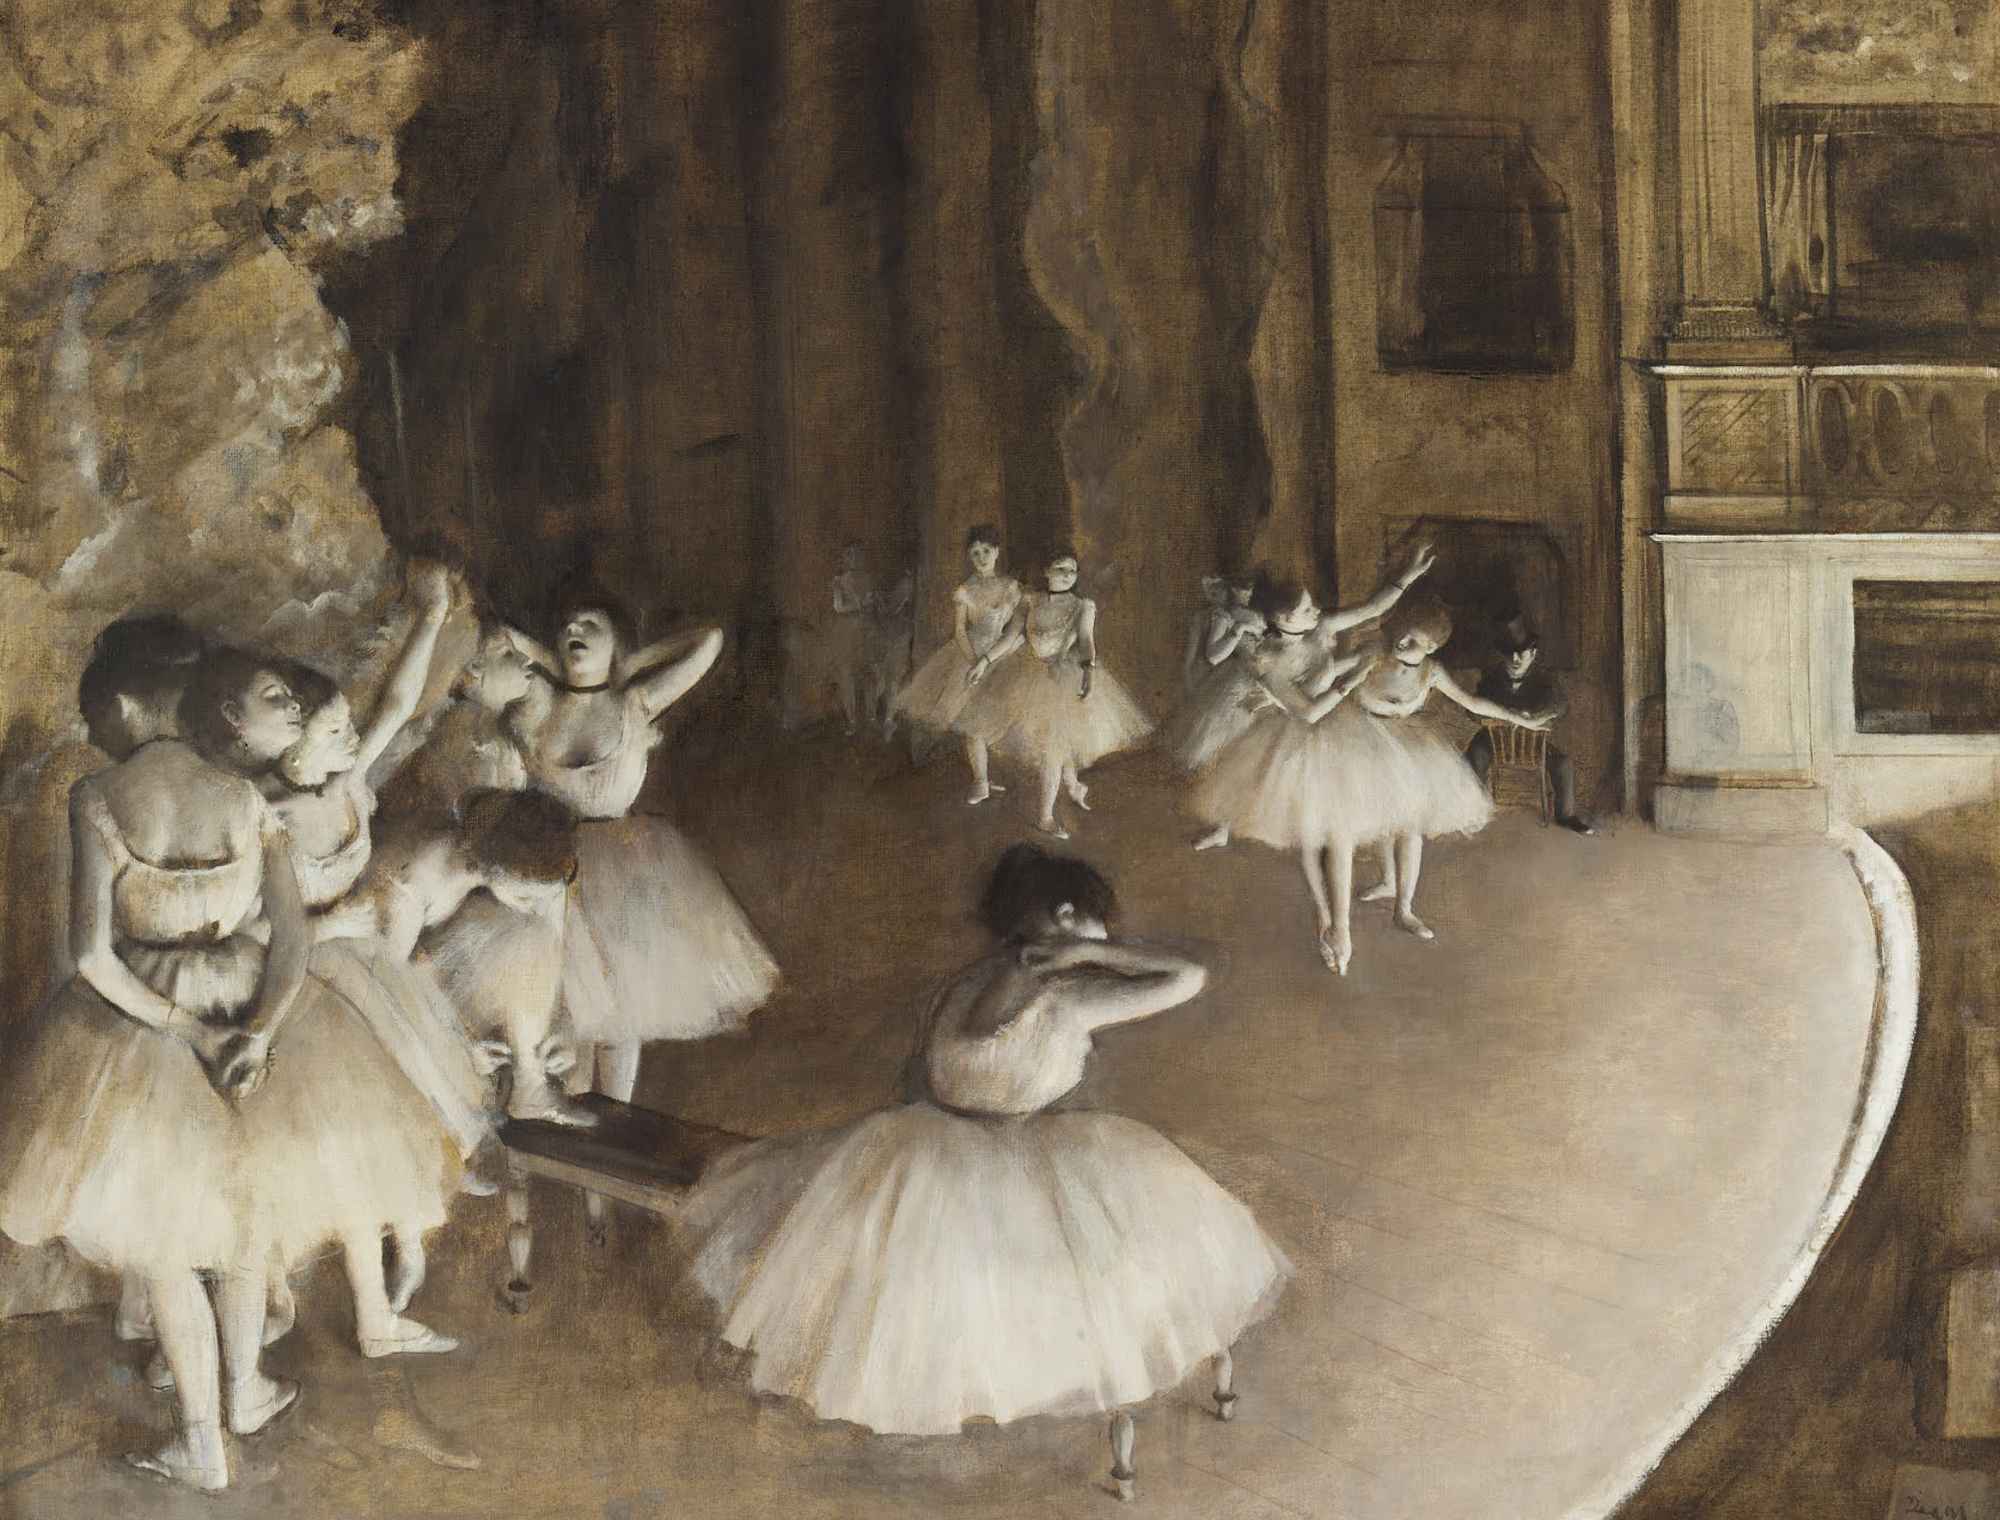 Ballet Rehearsal on Stage - Degas | by Dev | Künstler | Medium